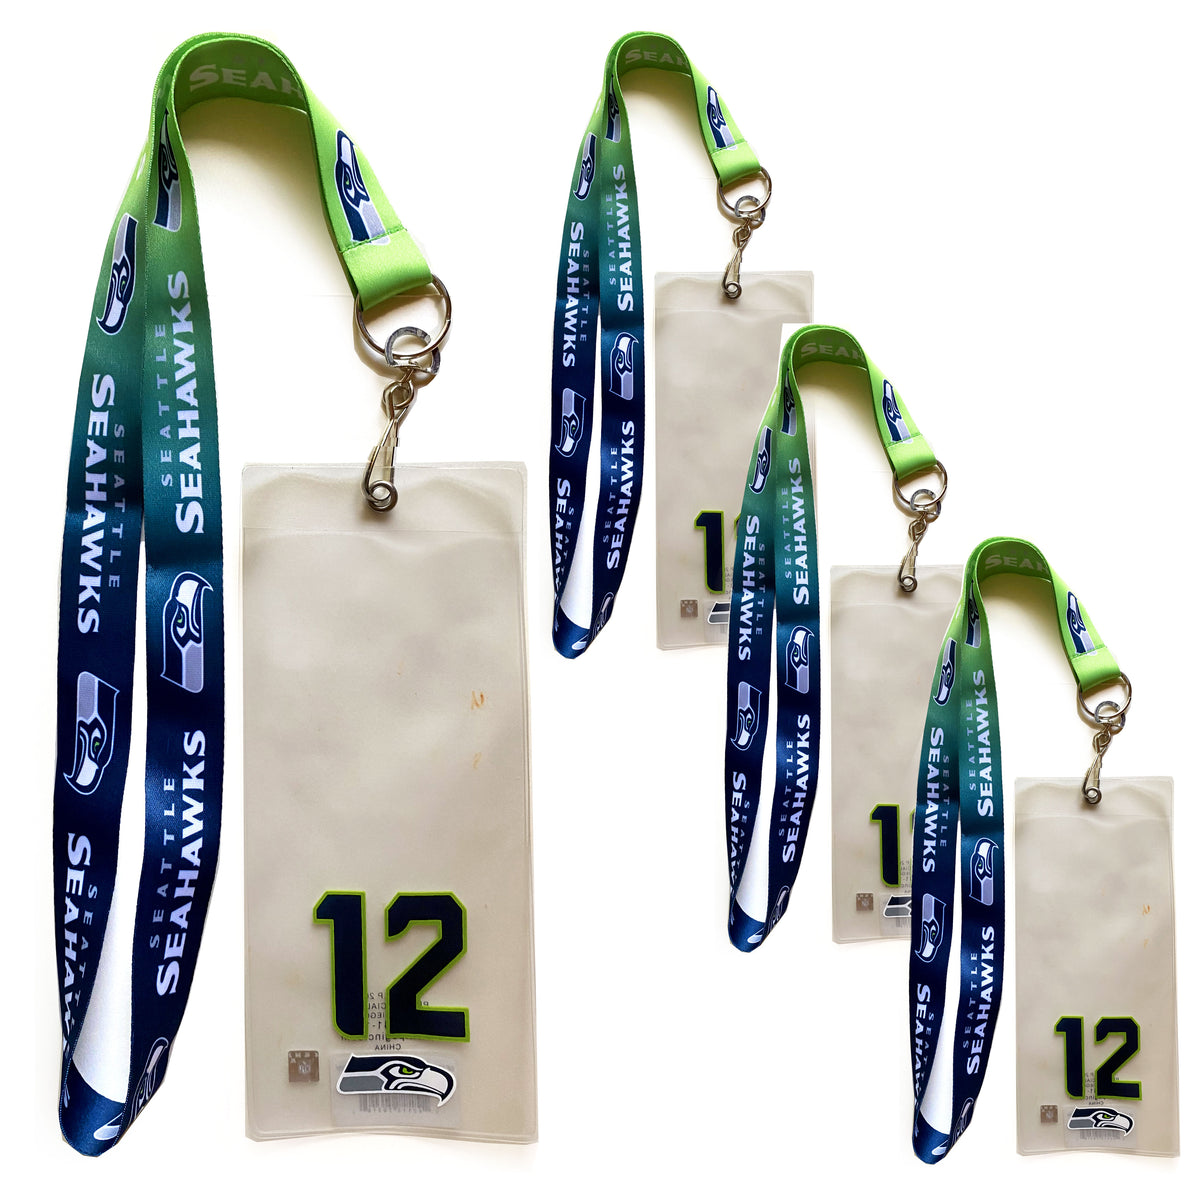 Seattle Seahawks Badge Reel - White